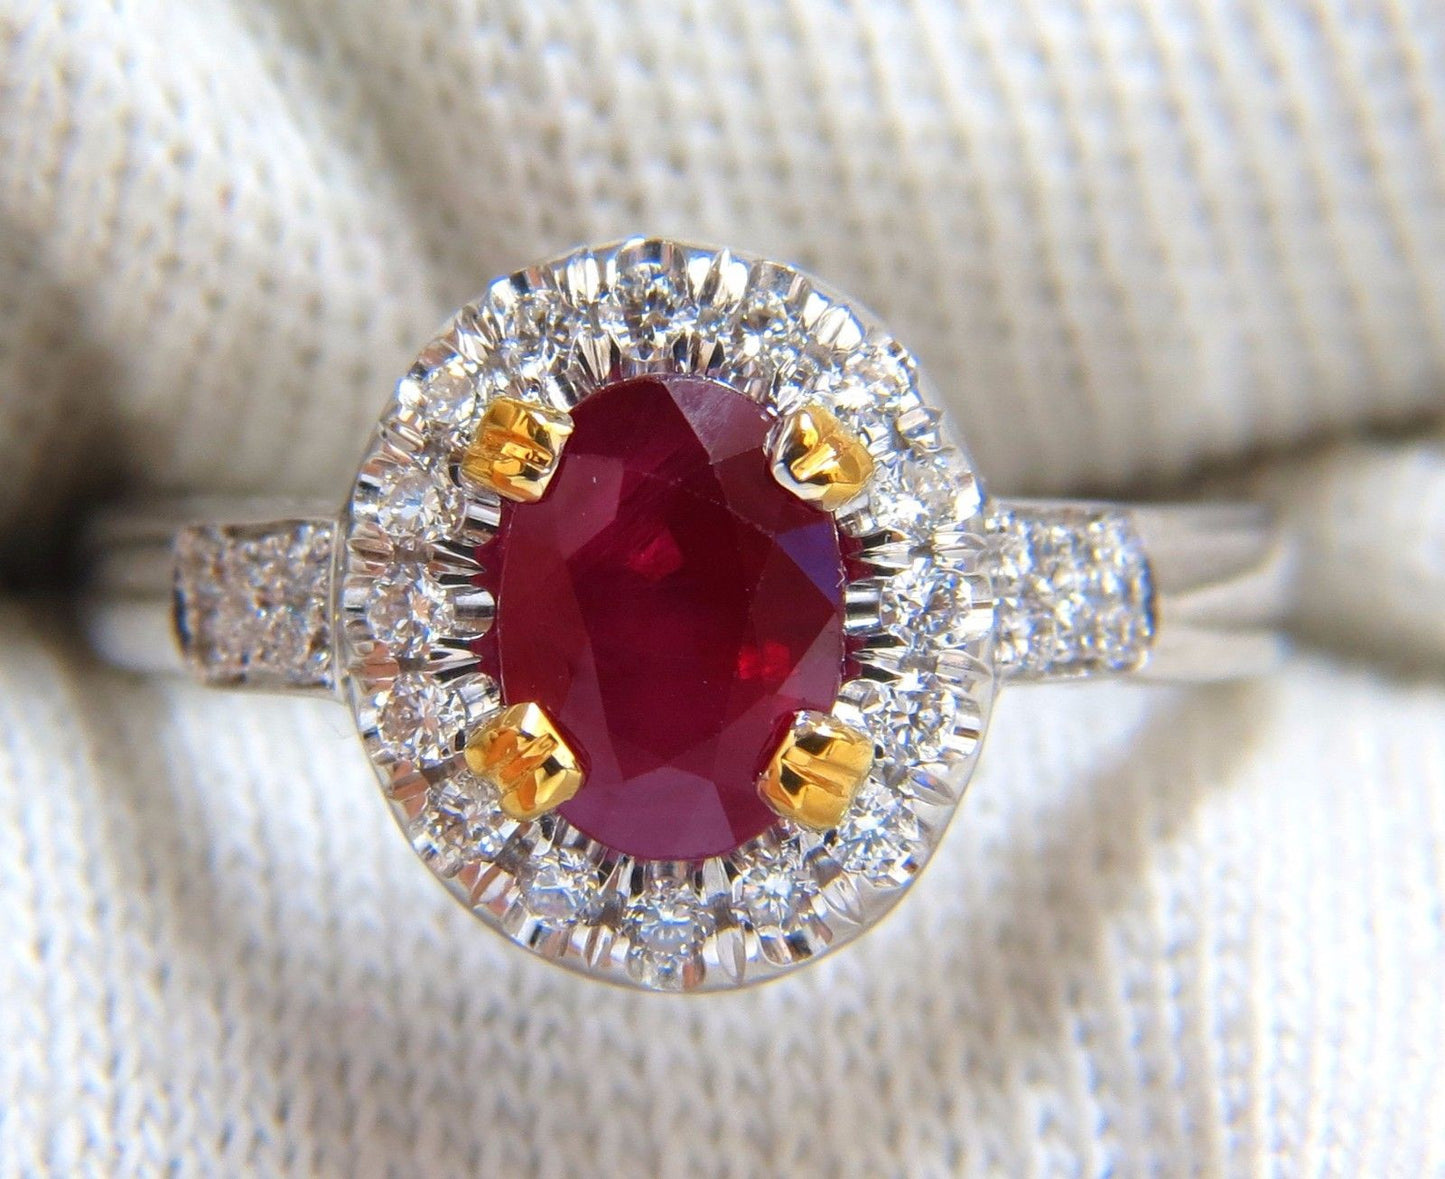 GIA Certified 1.95ct Natural Ruby Diamond Ring 18kt Vivid Red & Origin